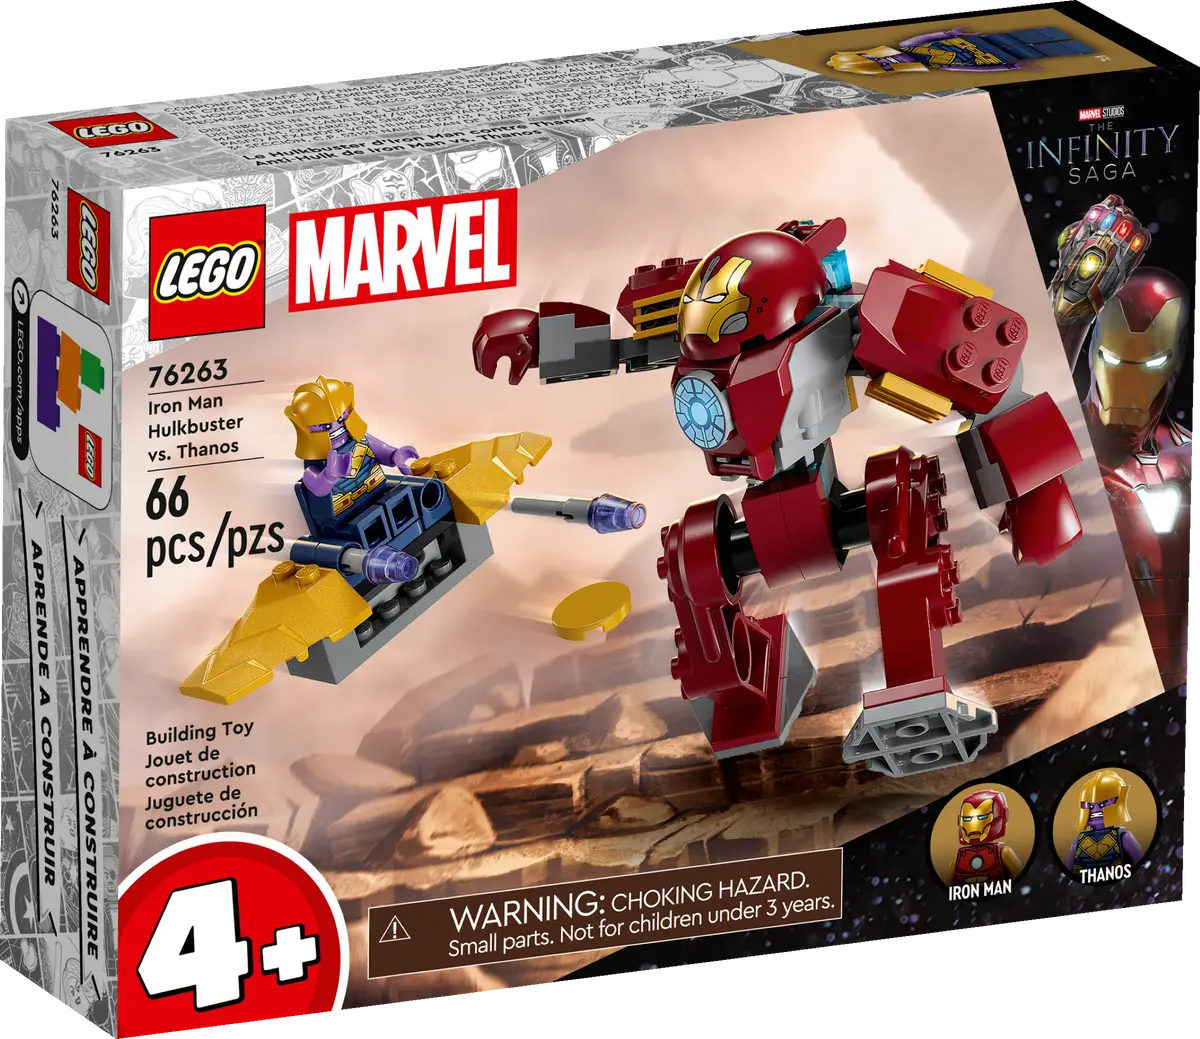 LEGO Marvel Infinity Saga: Hulkbuster De Iron Man vs Thanos 76263